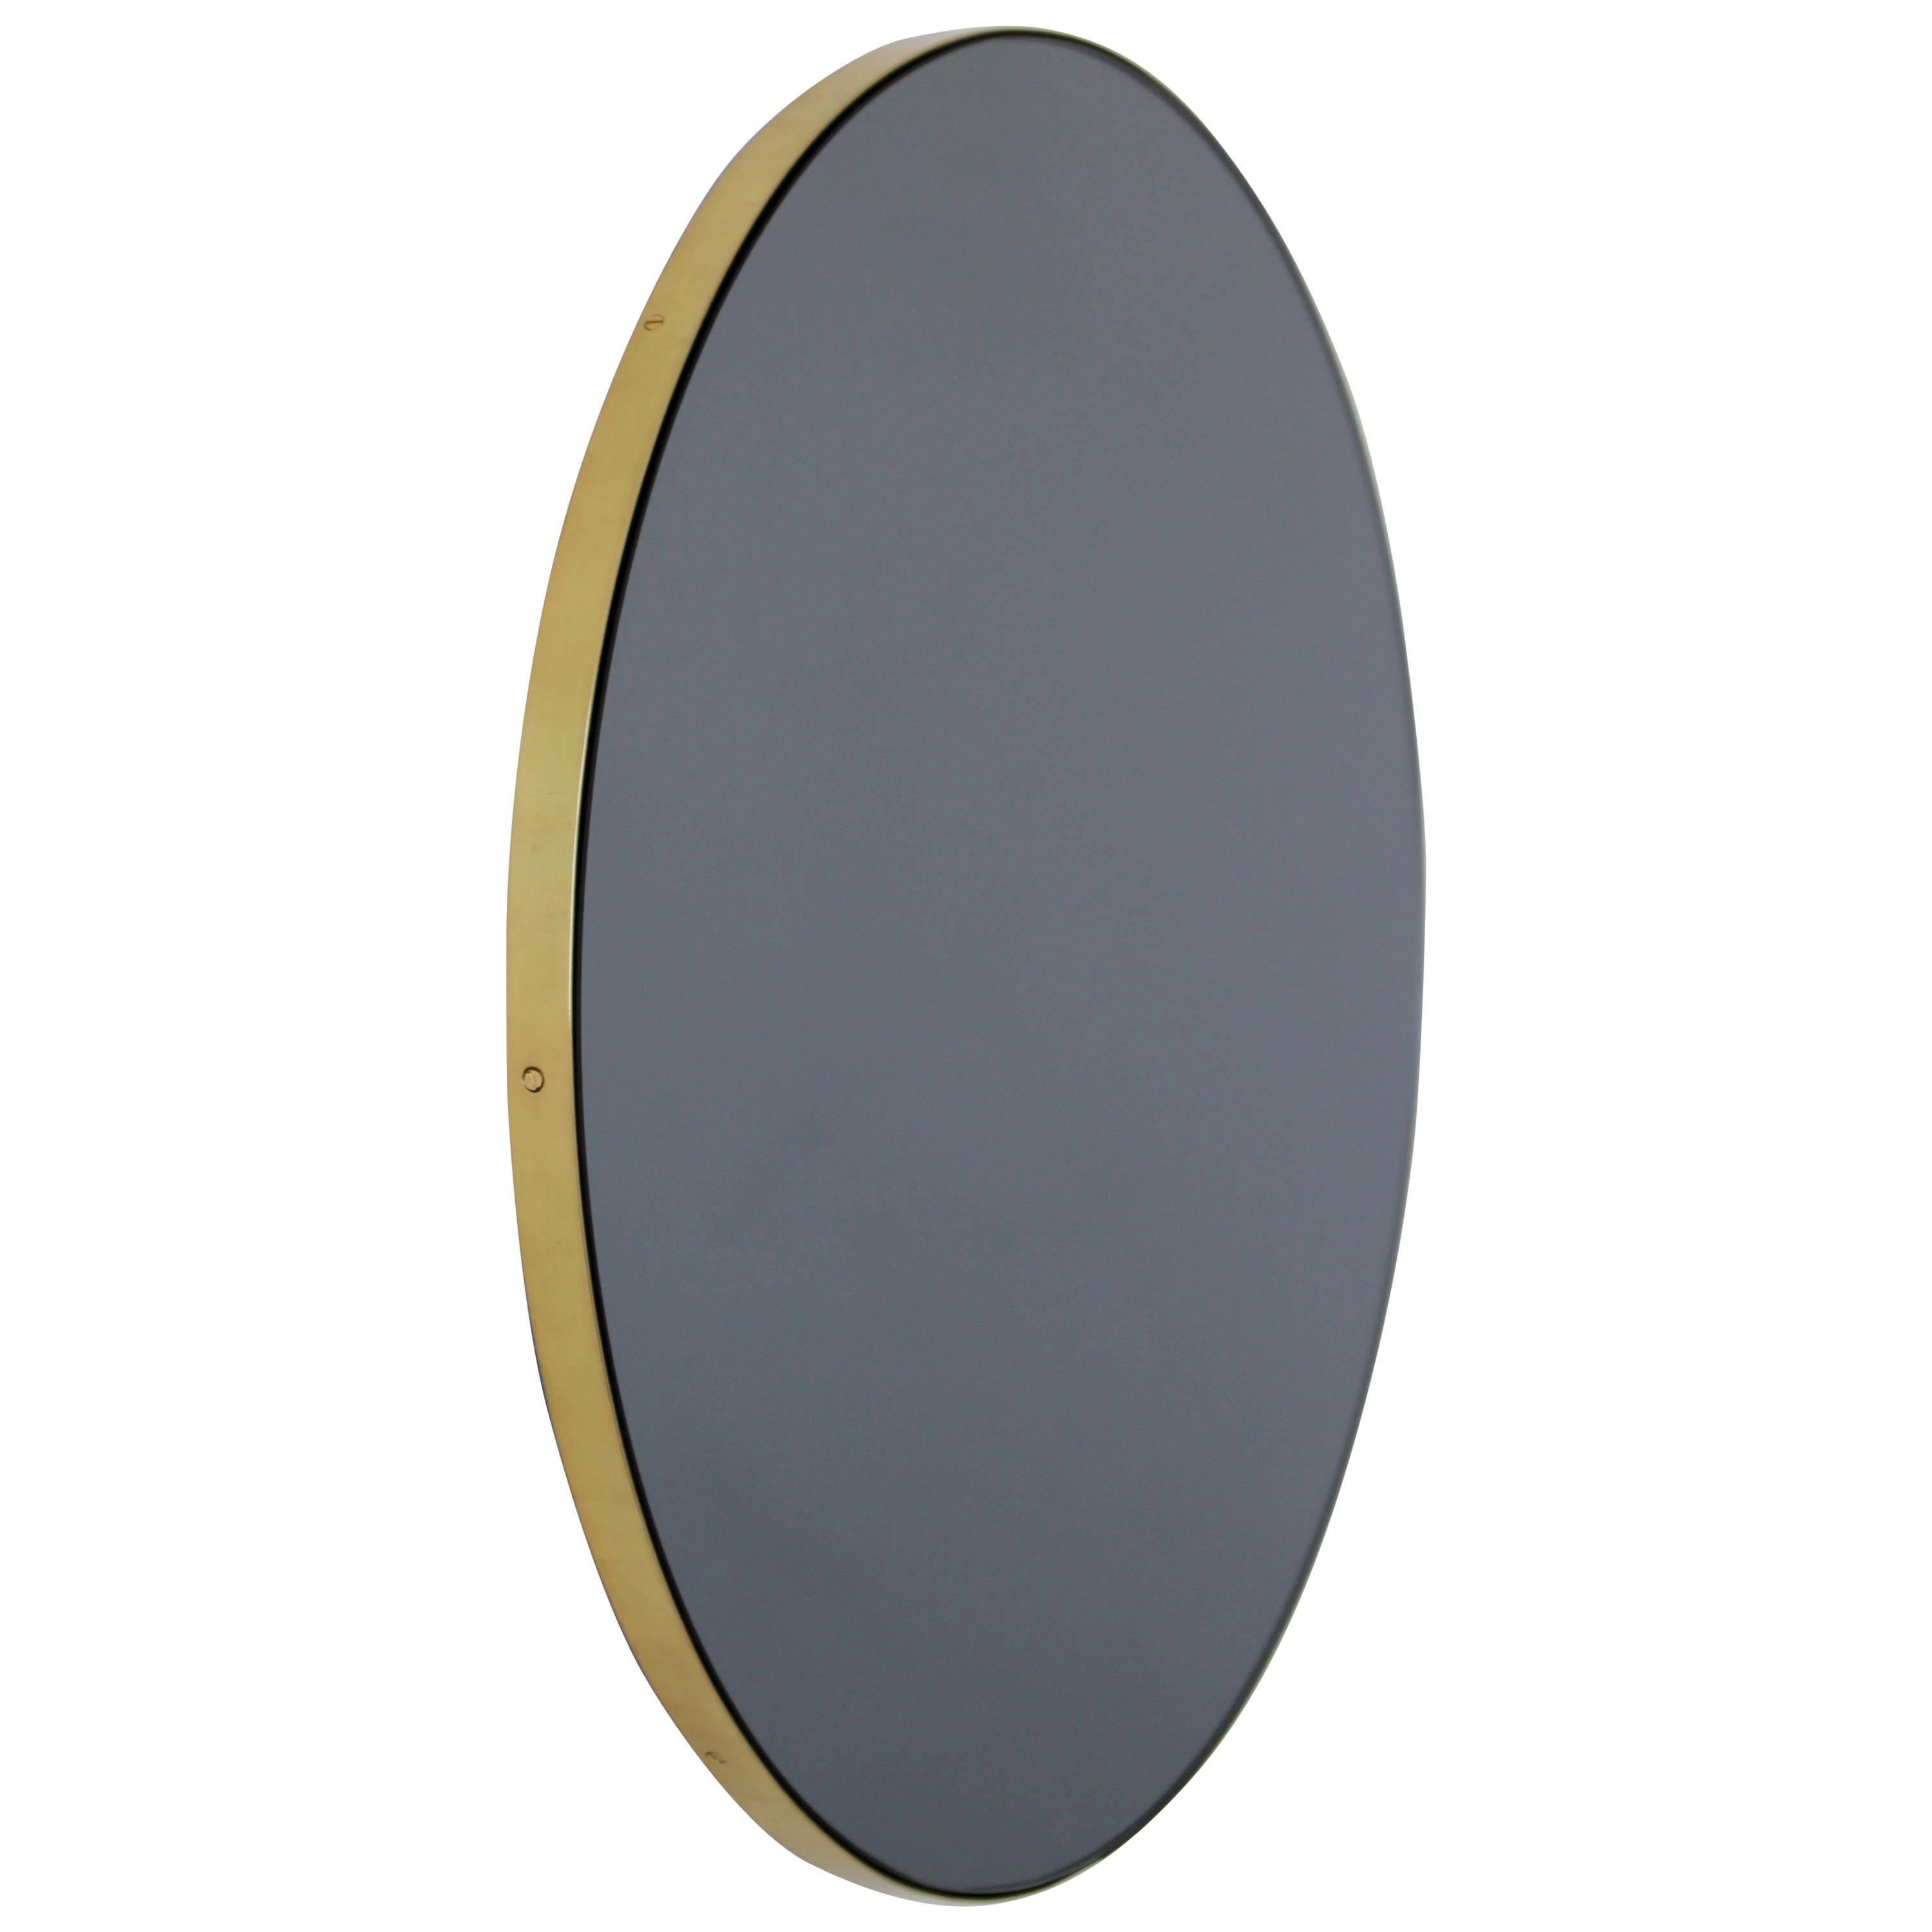 Orbis Black Tinted Round Contemporary Mirror with a Brass Frame, Medium